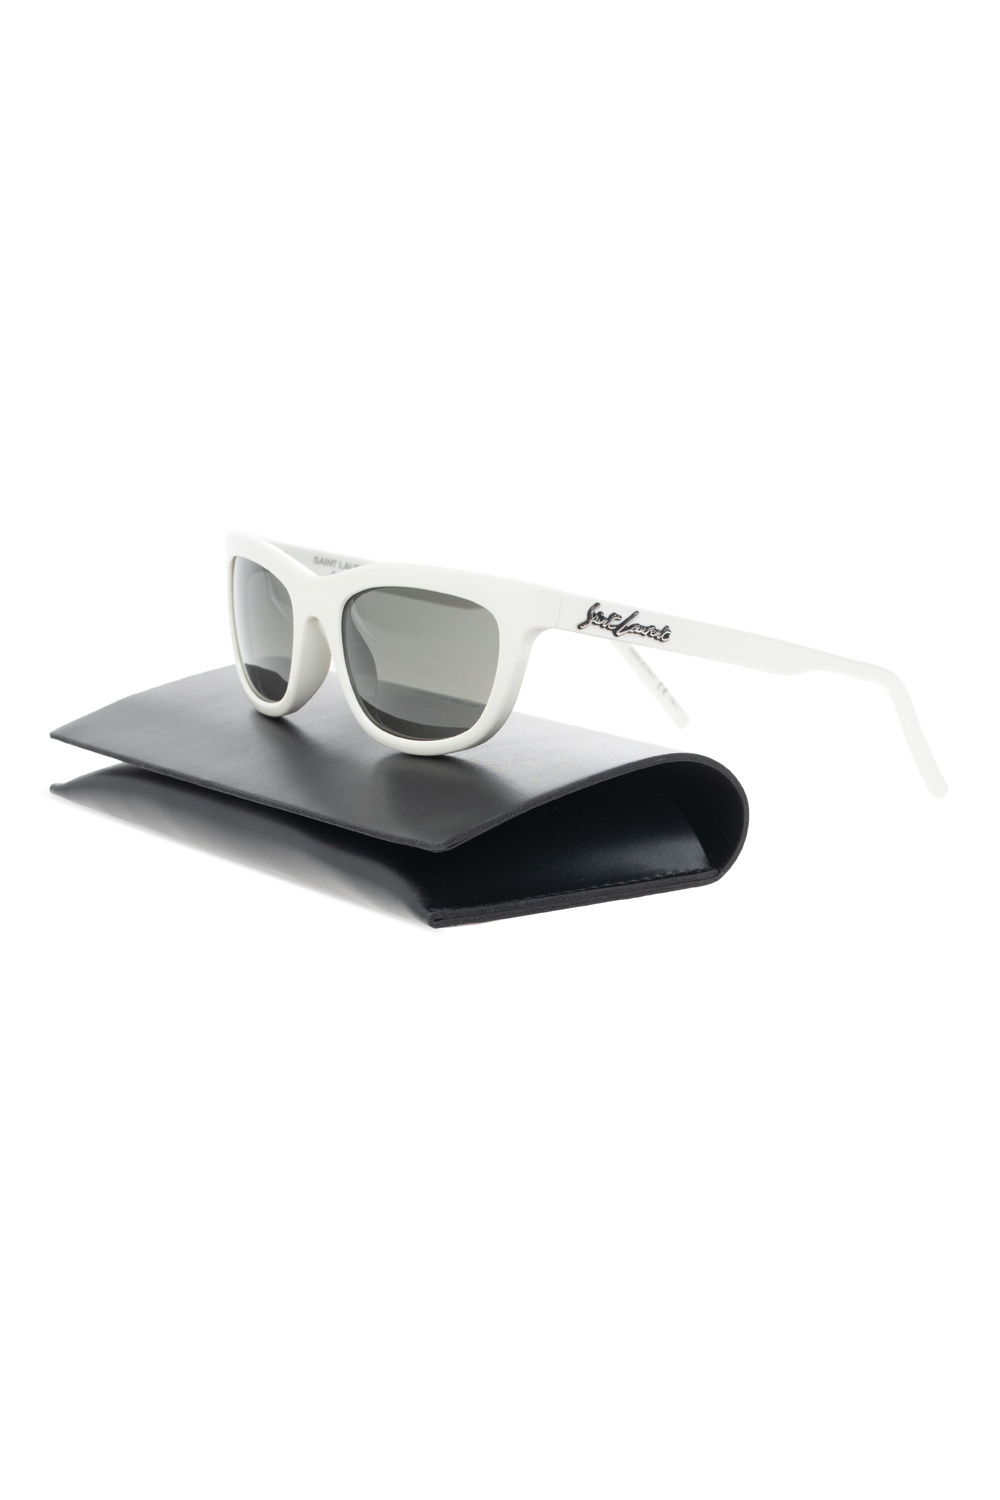 Saint Laurent ‘SL 493’ sunglasses